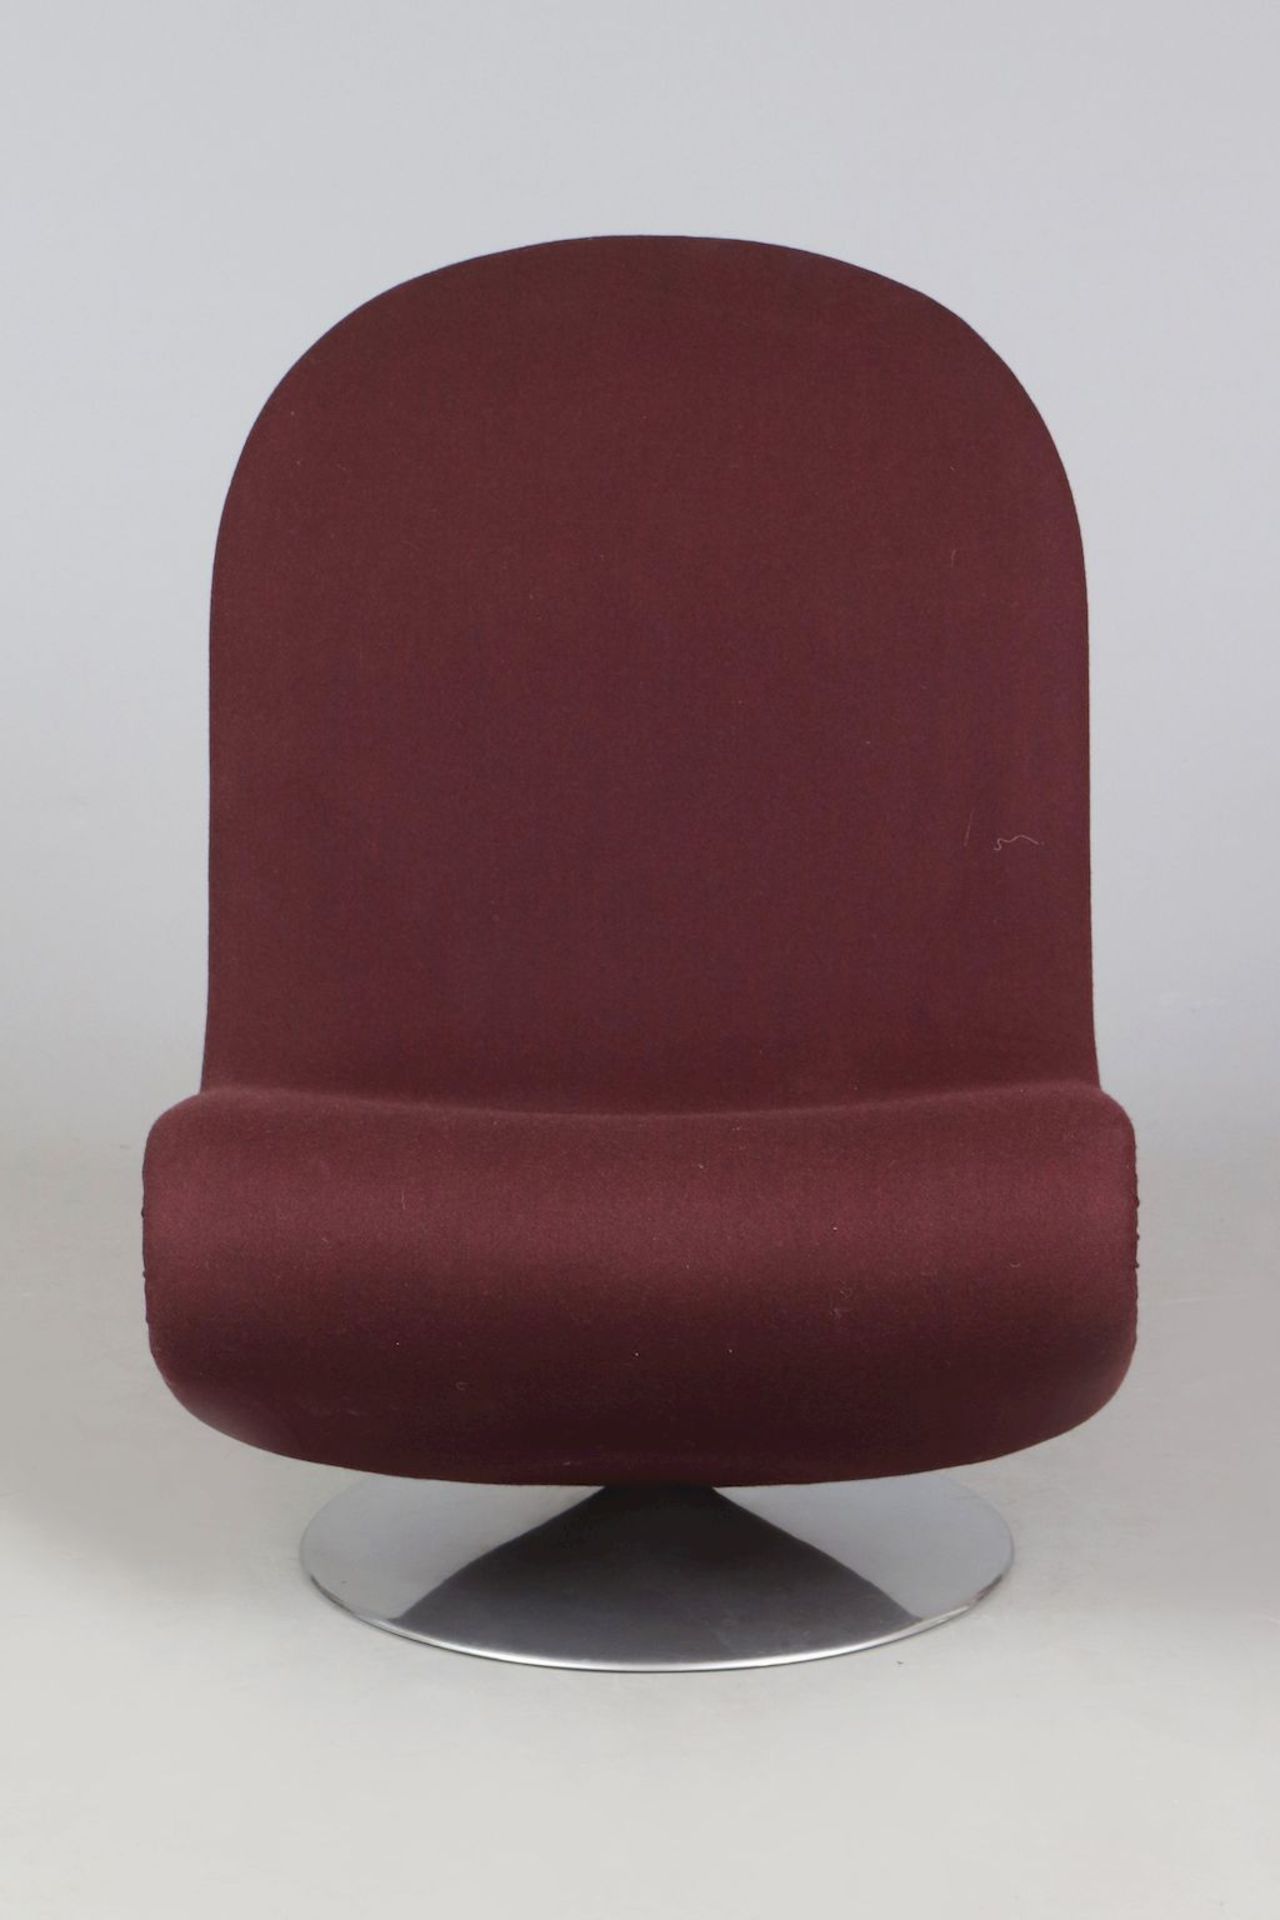 VERNER PANTON 1-2-3 Lounge Chair - Image 2 of 4